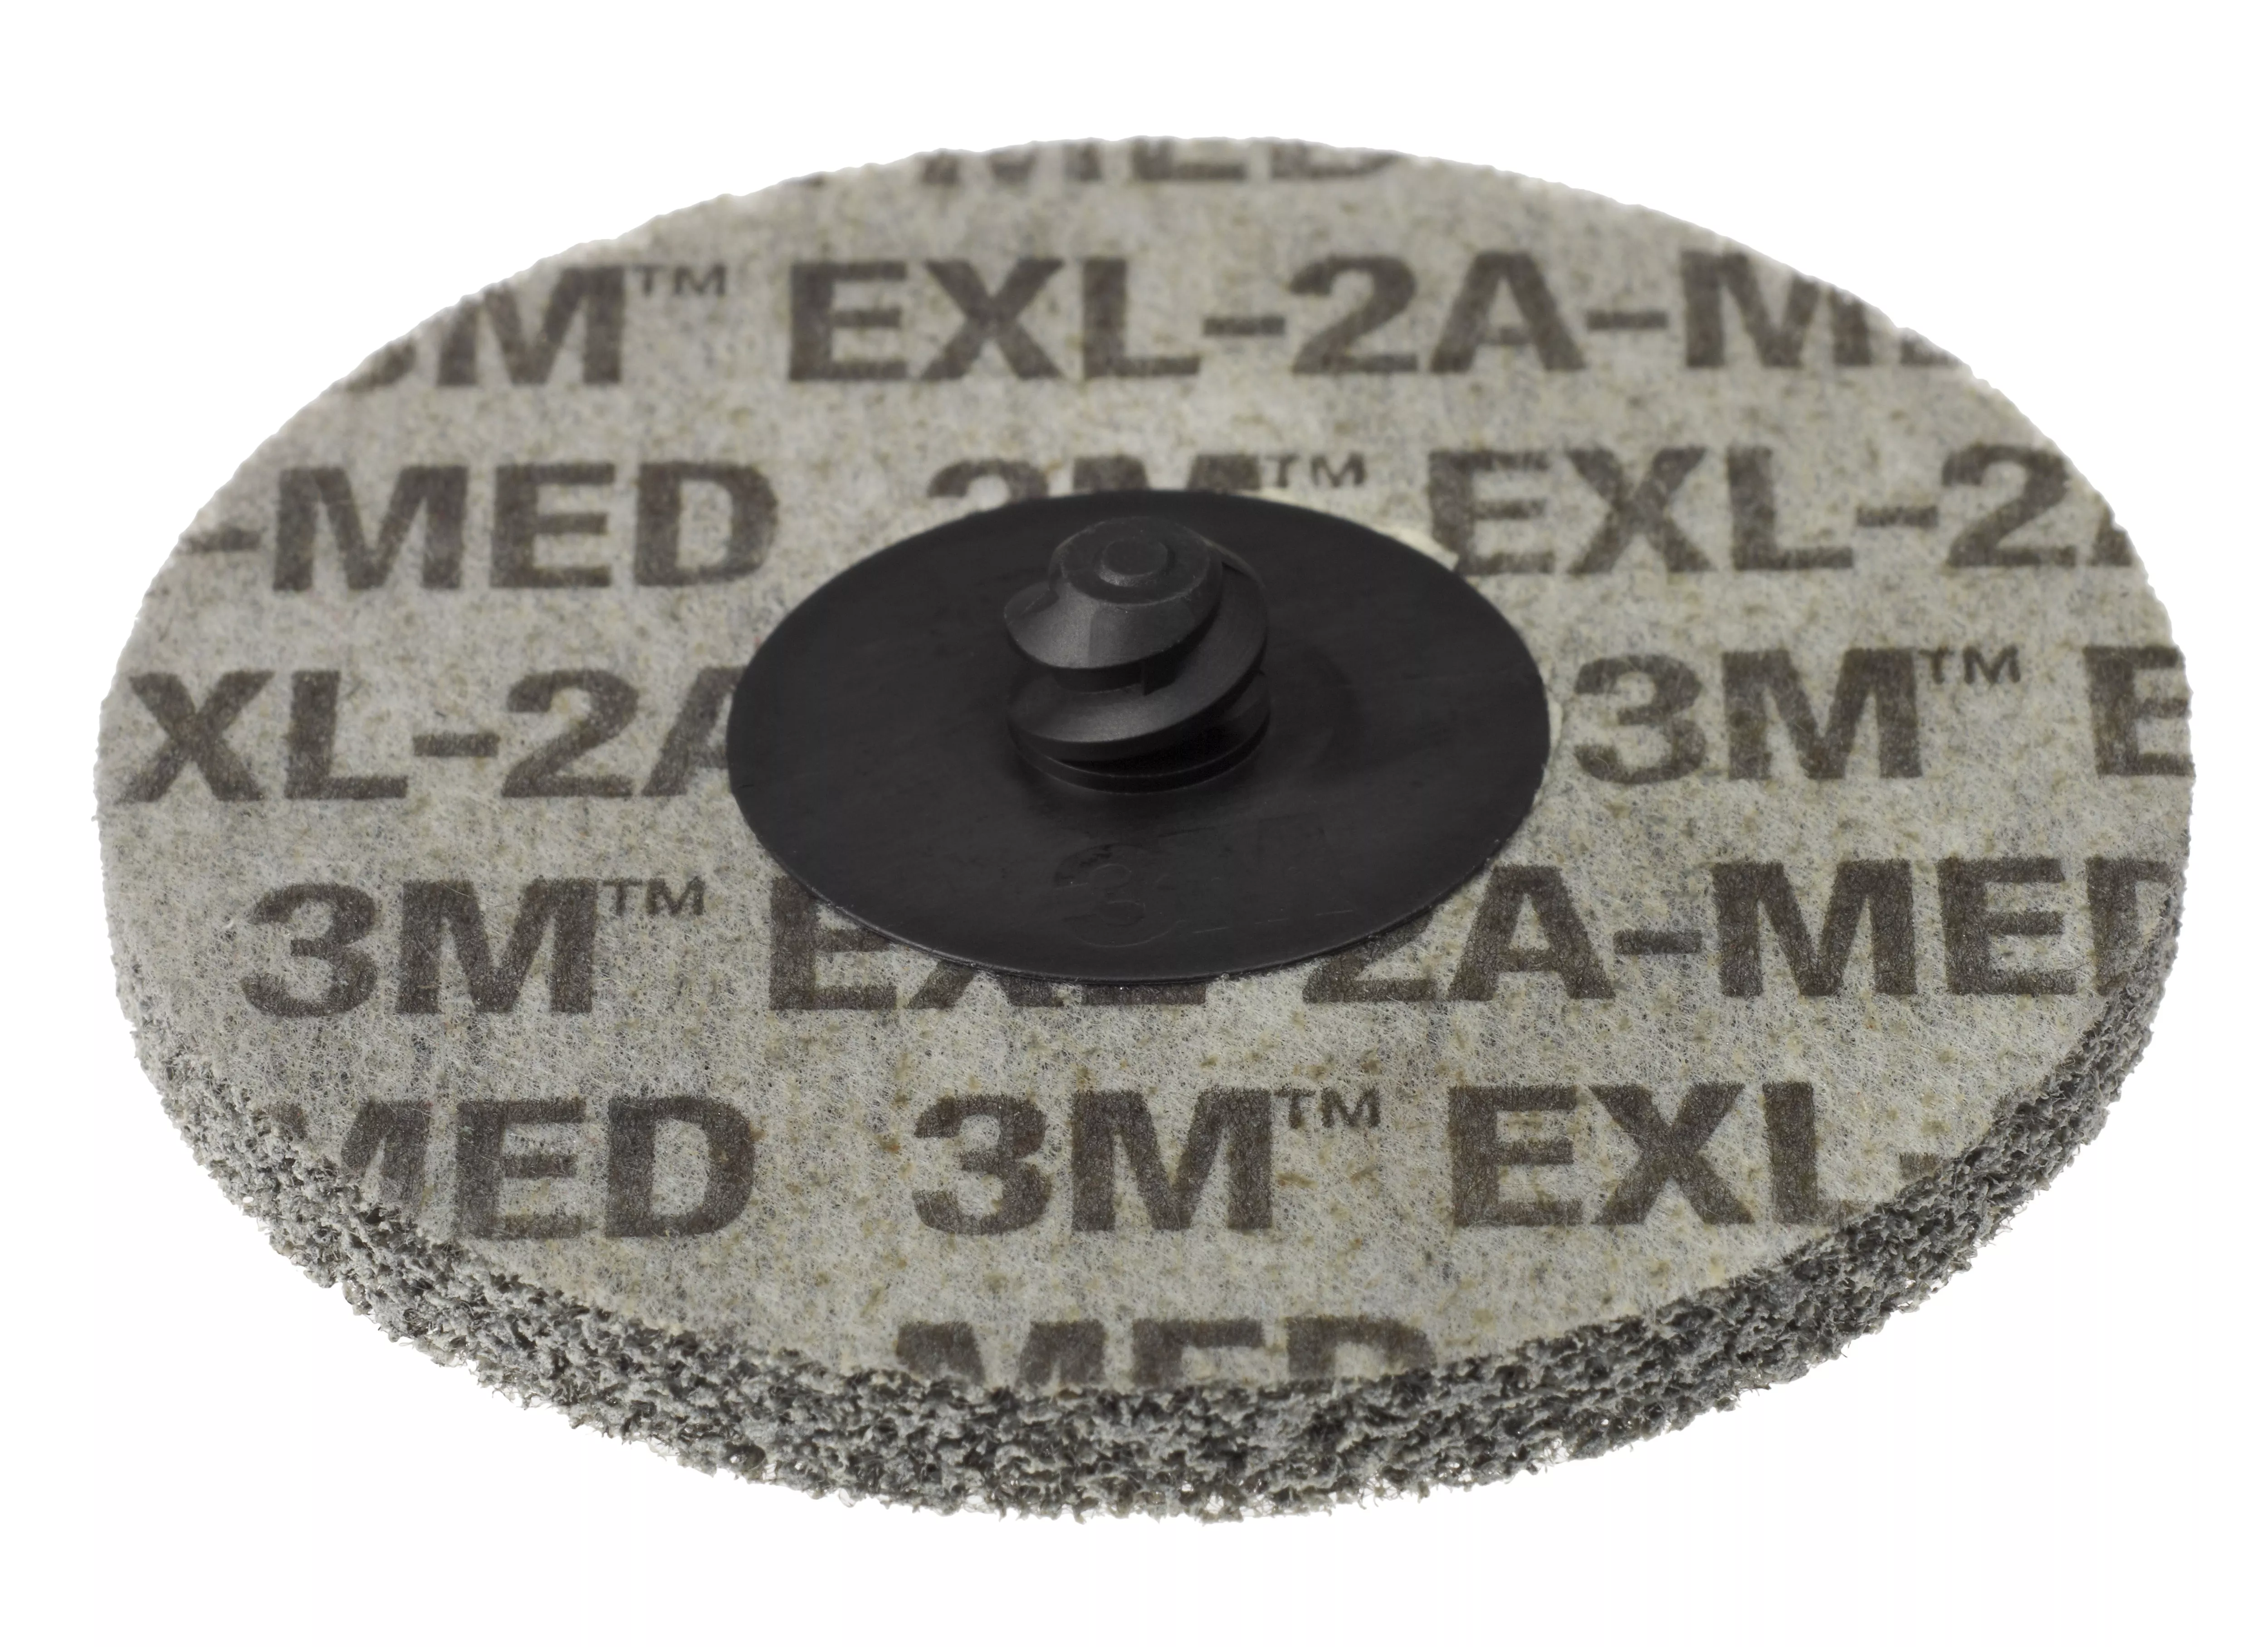 Scotch-Brite™ Roloc™ EXL Unitized Wheel, XL-US, 2A Medium, TS, 3 in,
10/Carton, 40 ea/Case